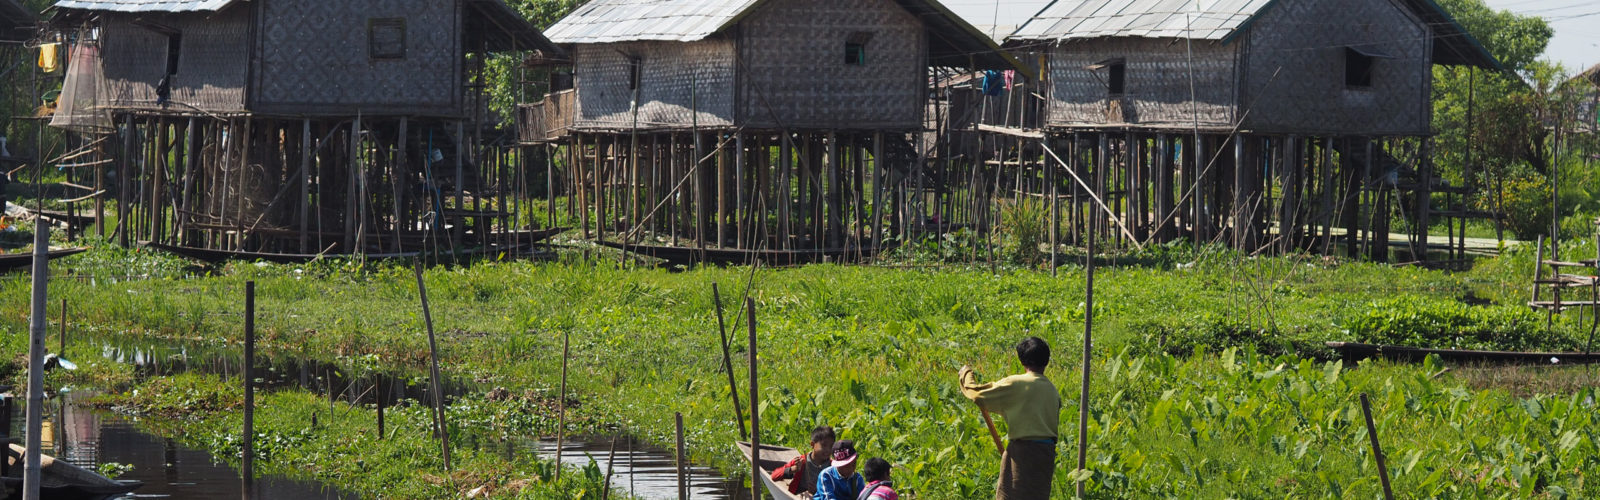 nyaung-shwe-houses-and-boat